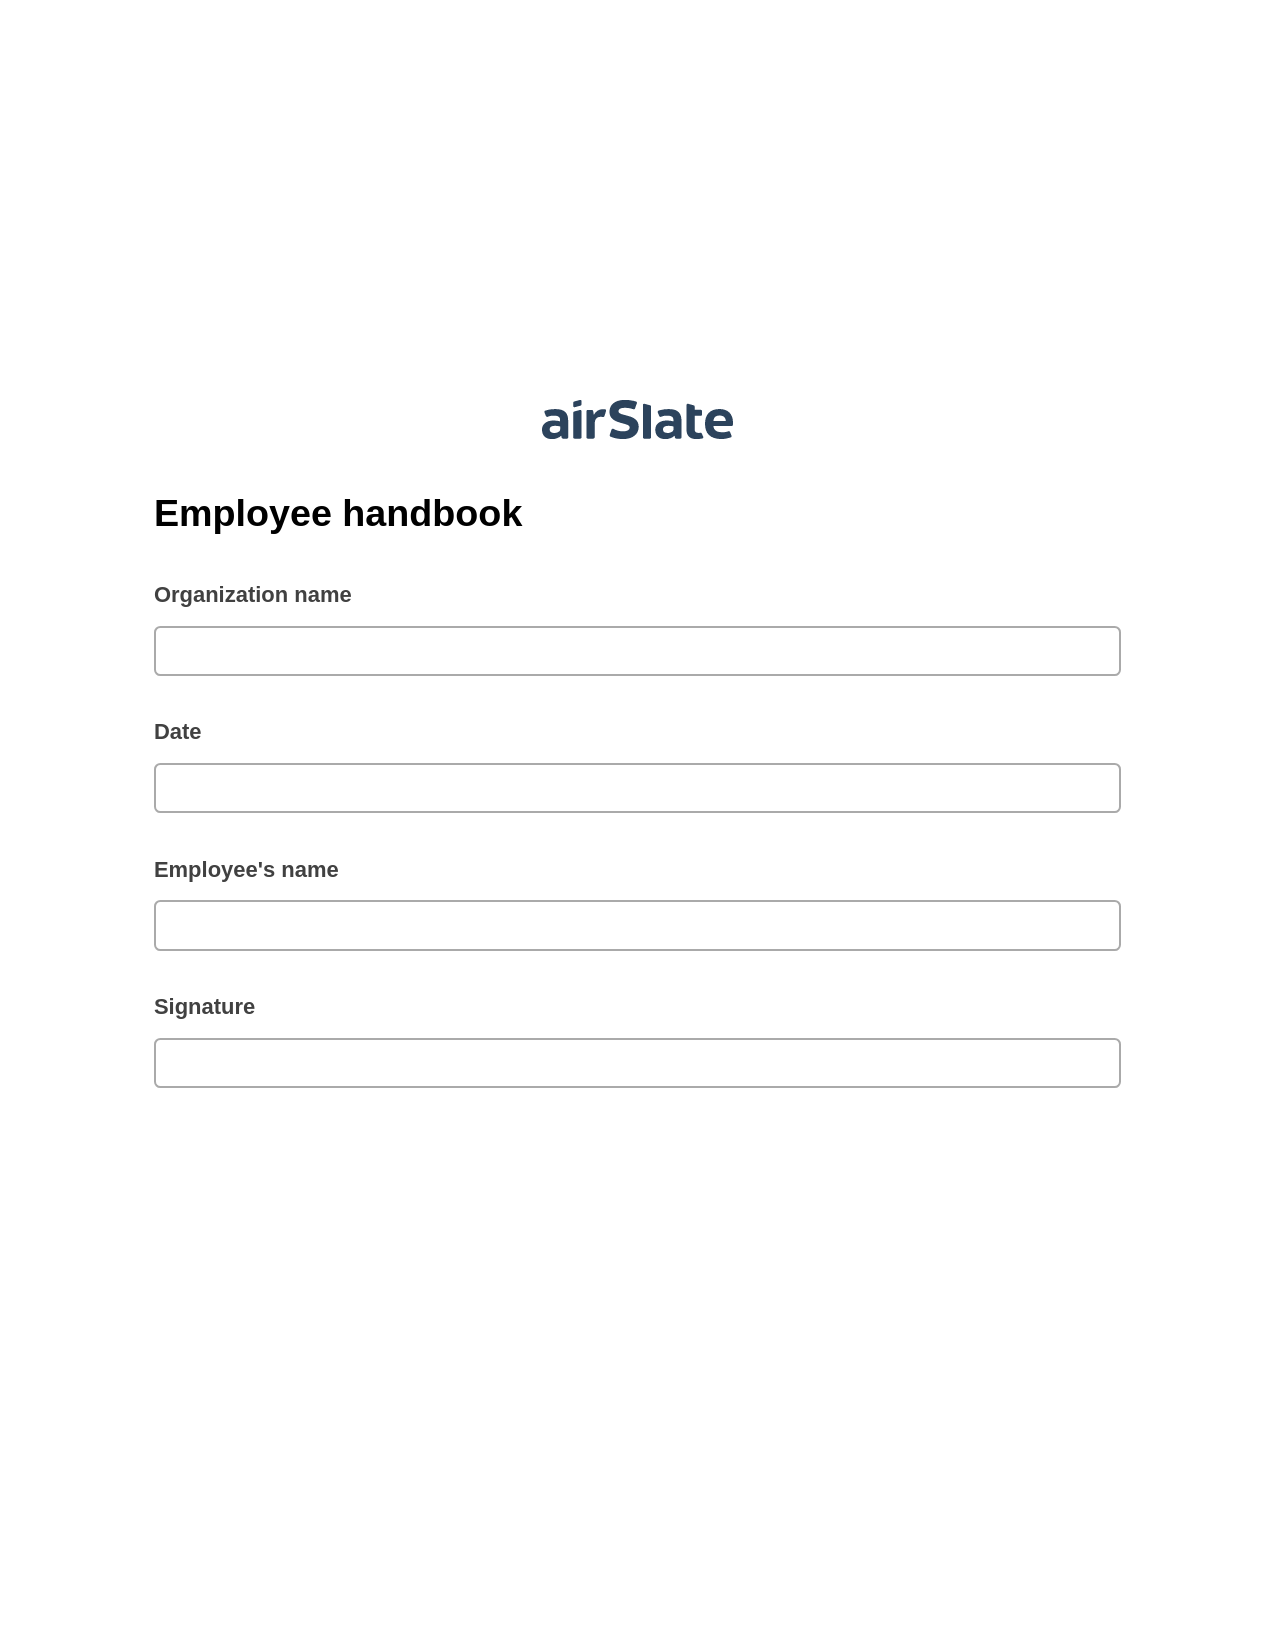 Employee handbook Pre-fill from MySQL Bot, Update NetSuite Records Bot, OneDrive Bot